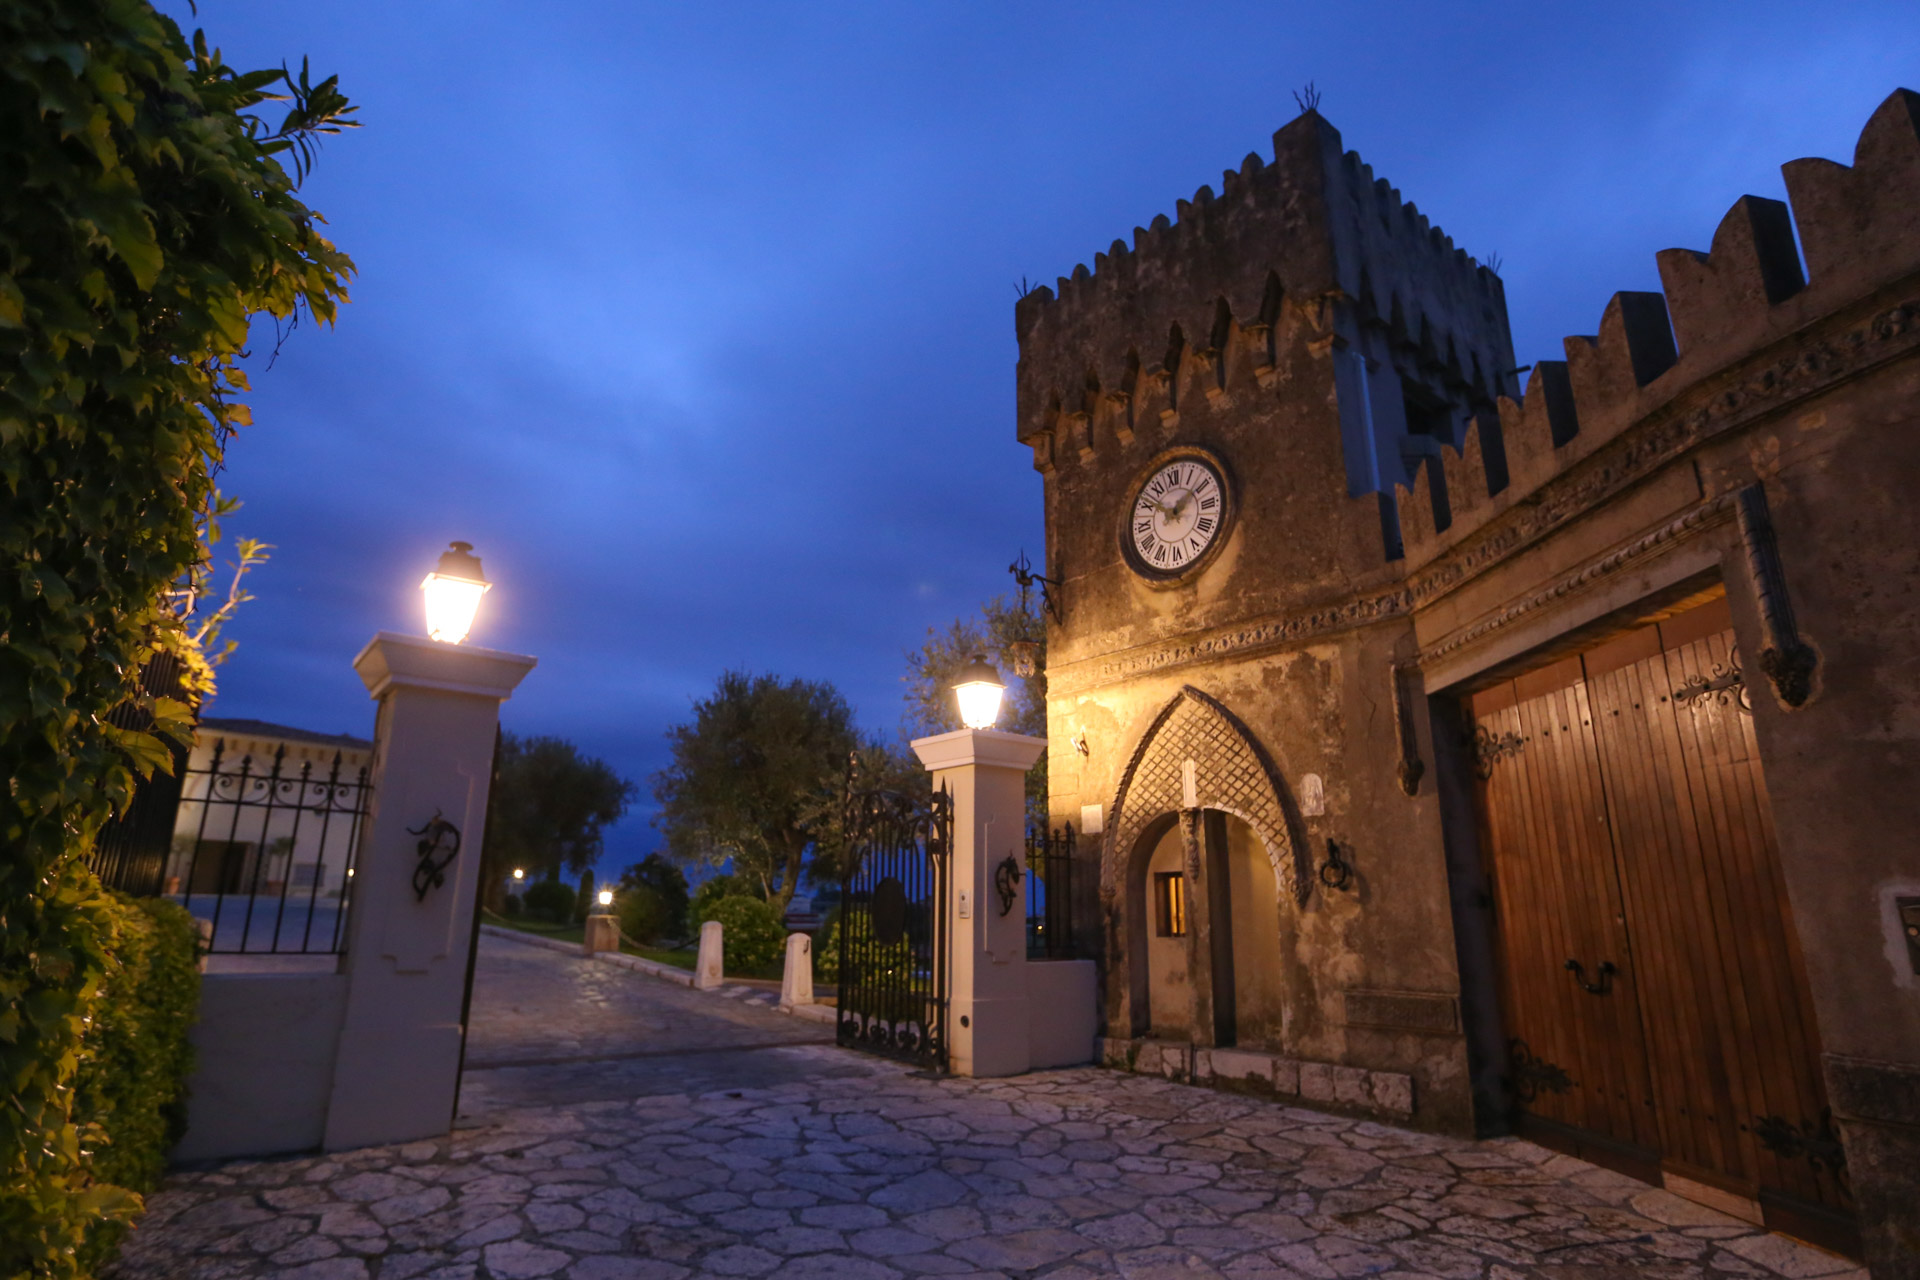 Entrance of the wine castel at dusk